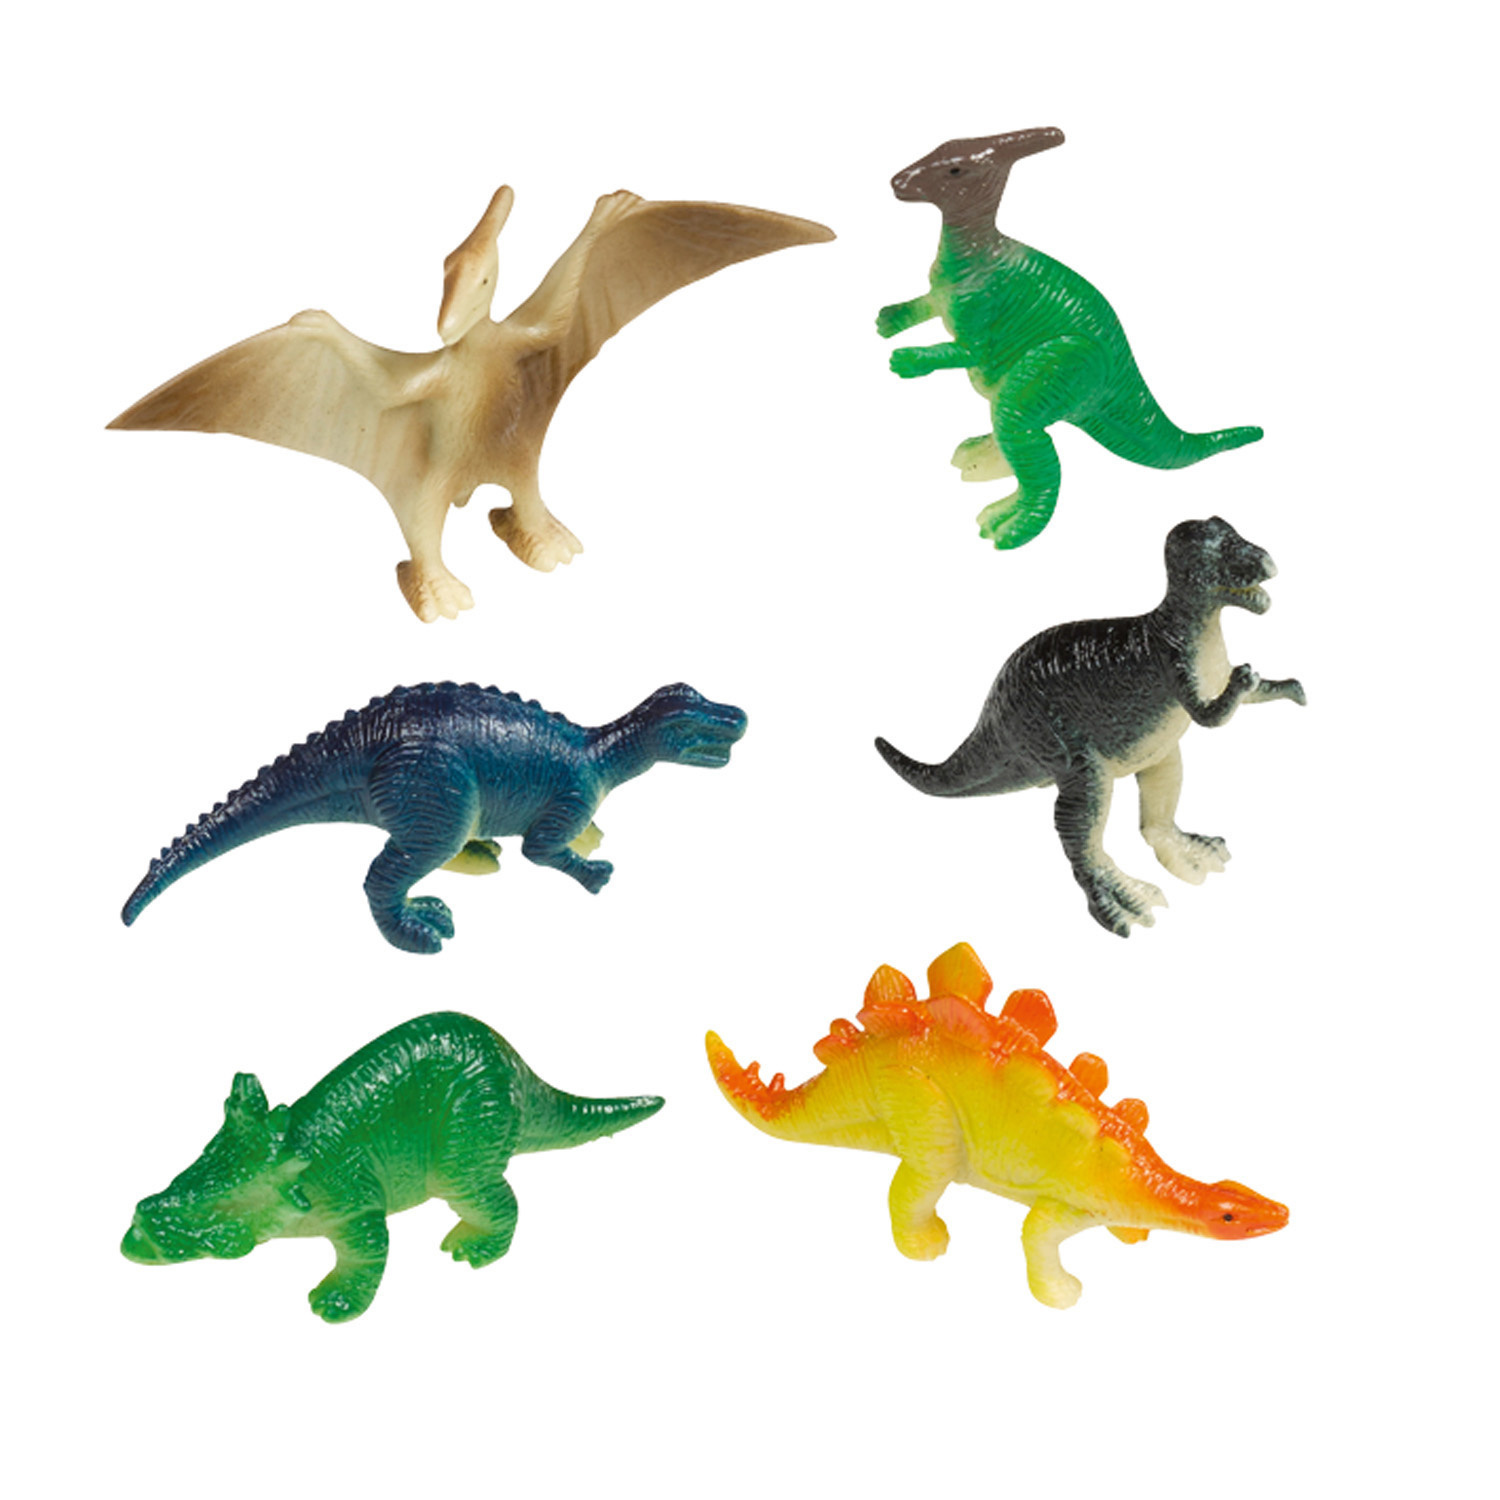 Speelfiguren Dinosaurussen (8st)